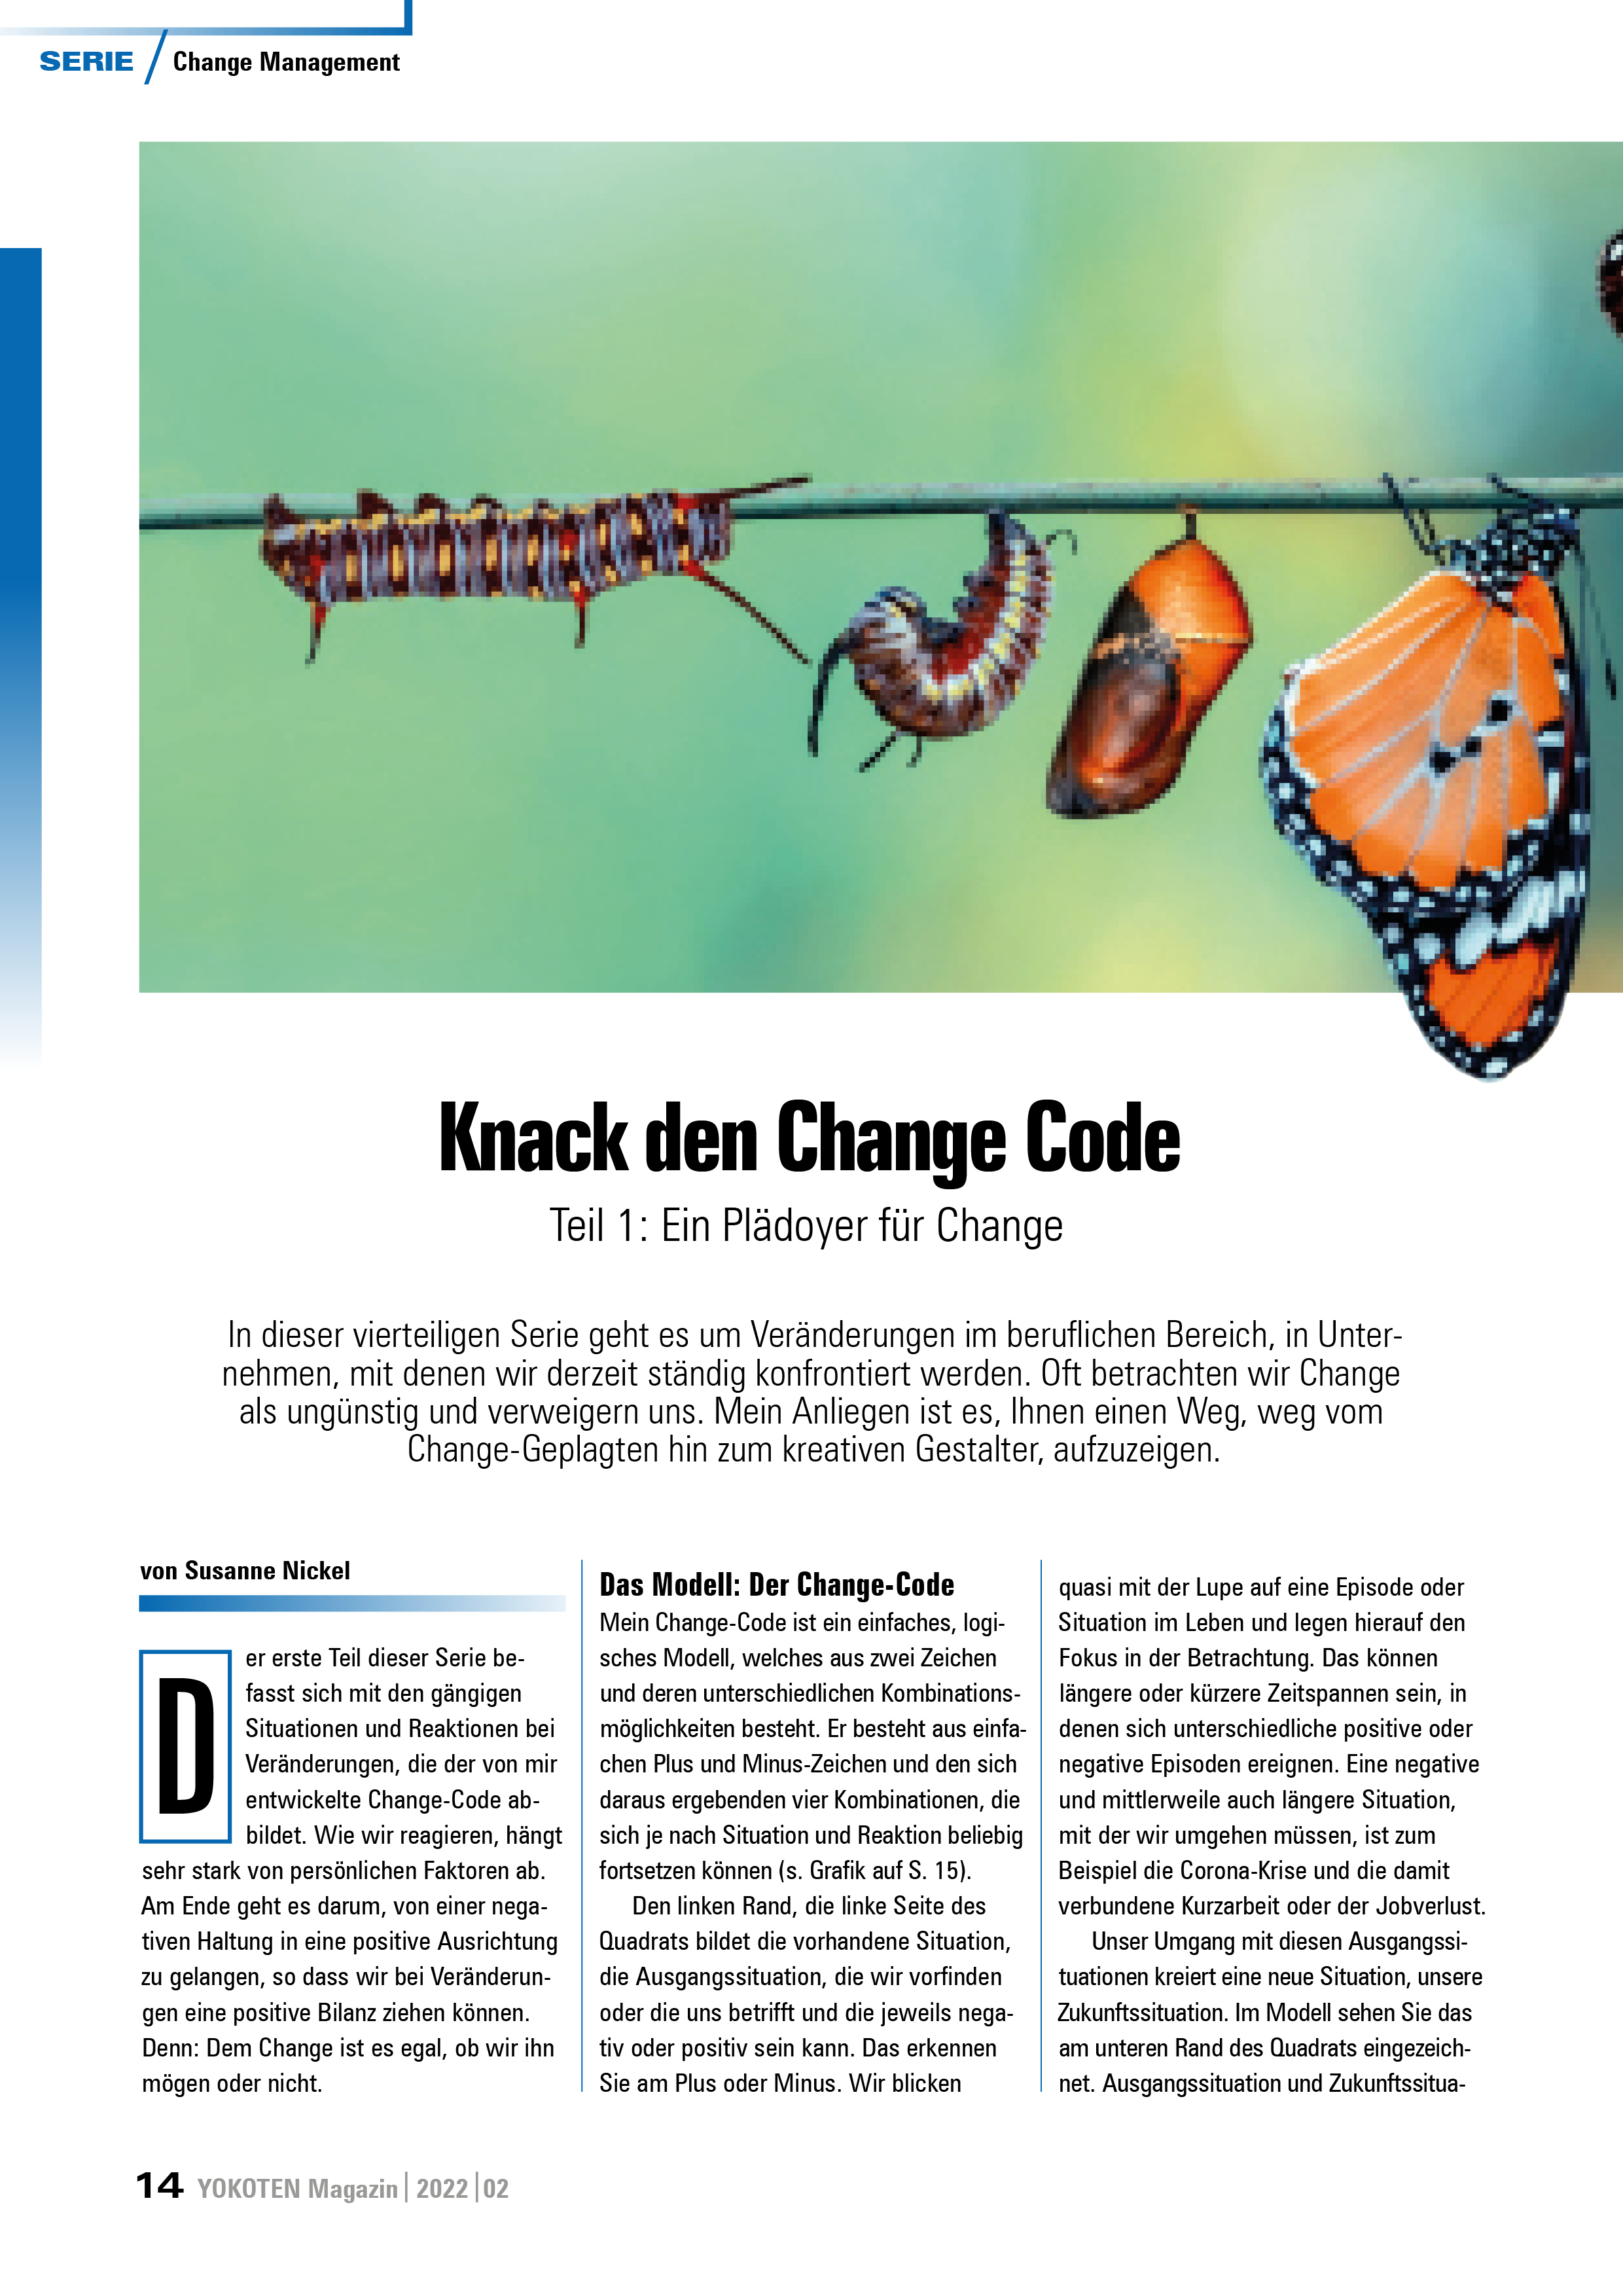 Knack den Change Code - Artikel aus Fachmagazin YOKOTEN 2022-02